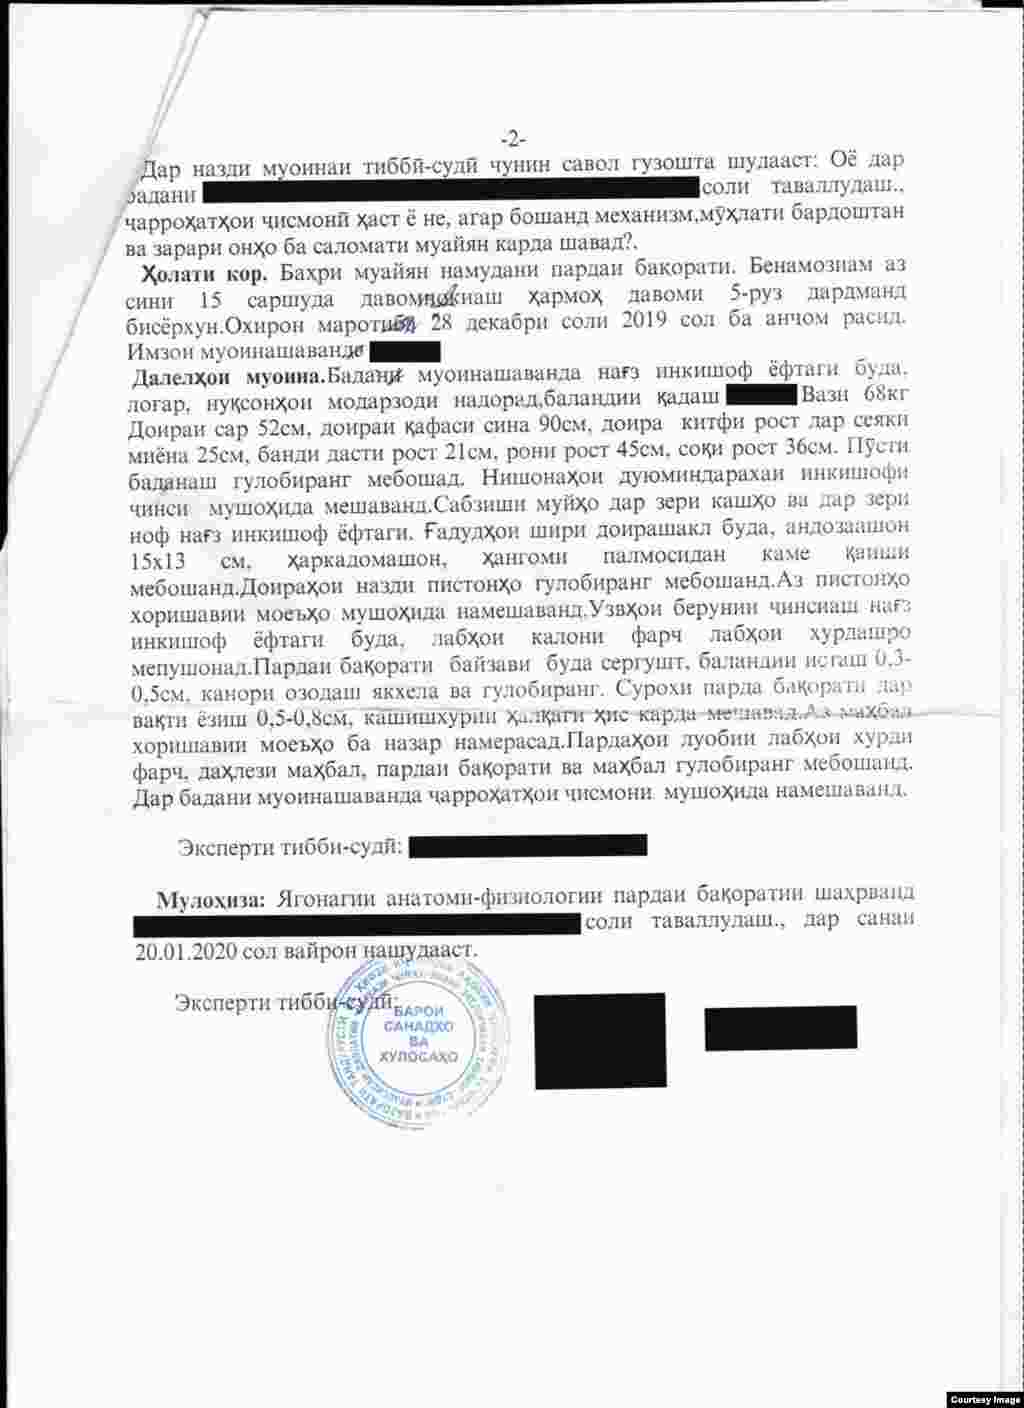 An official certificate for a Tajik virginity test